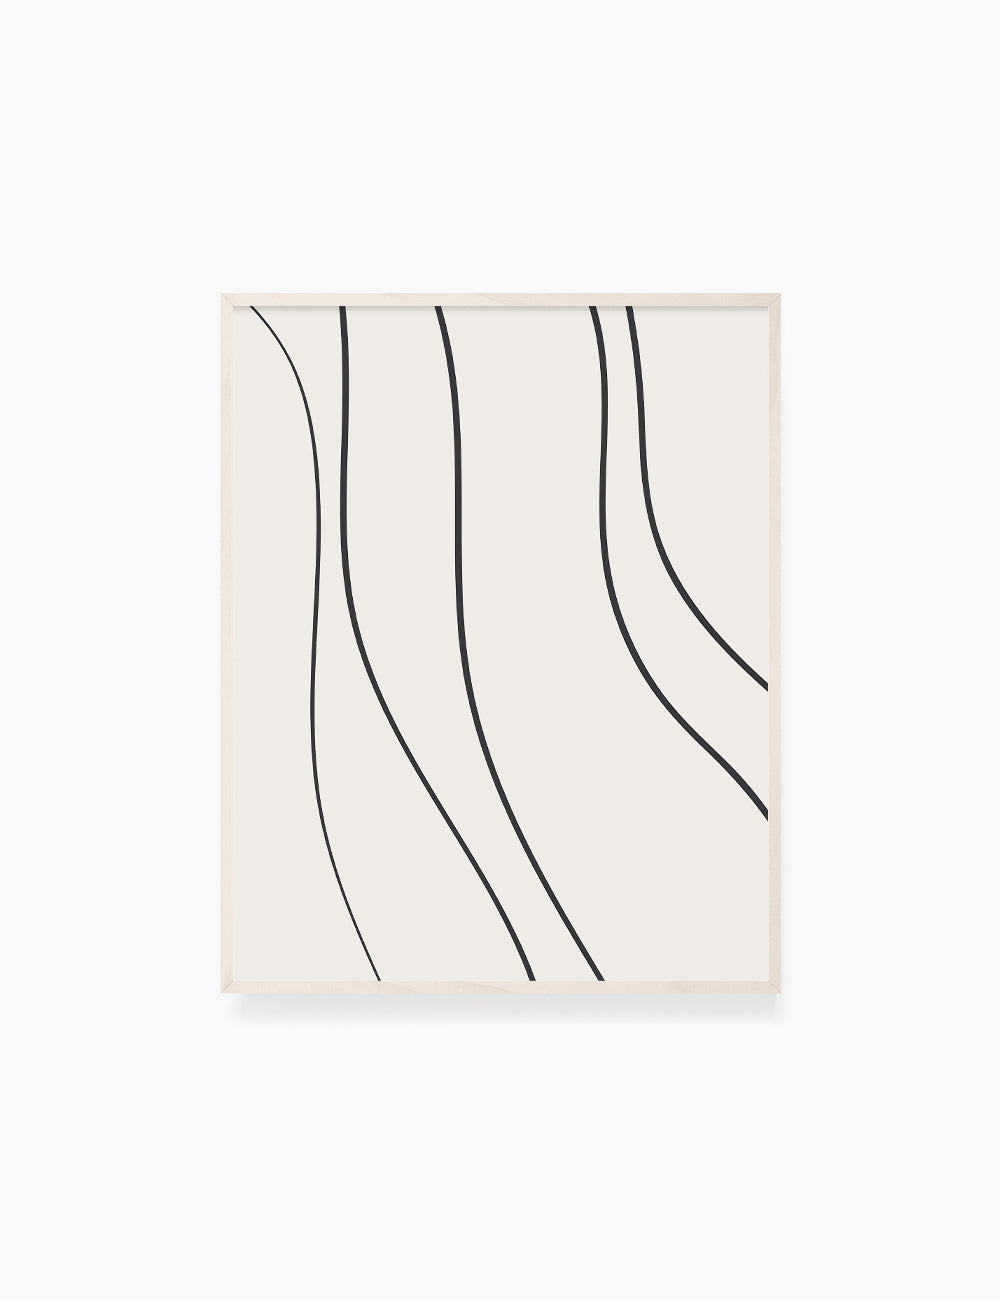 MINIMAL LINE ART. Abstract Waves. Boho. Beige. Black. Printable Wall Art Illustration. - PAPER MOON Art & Design